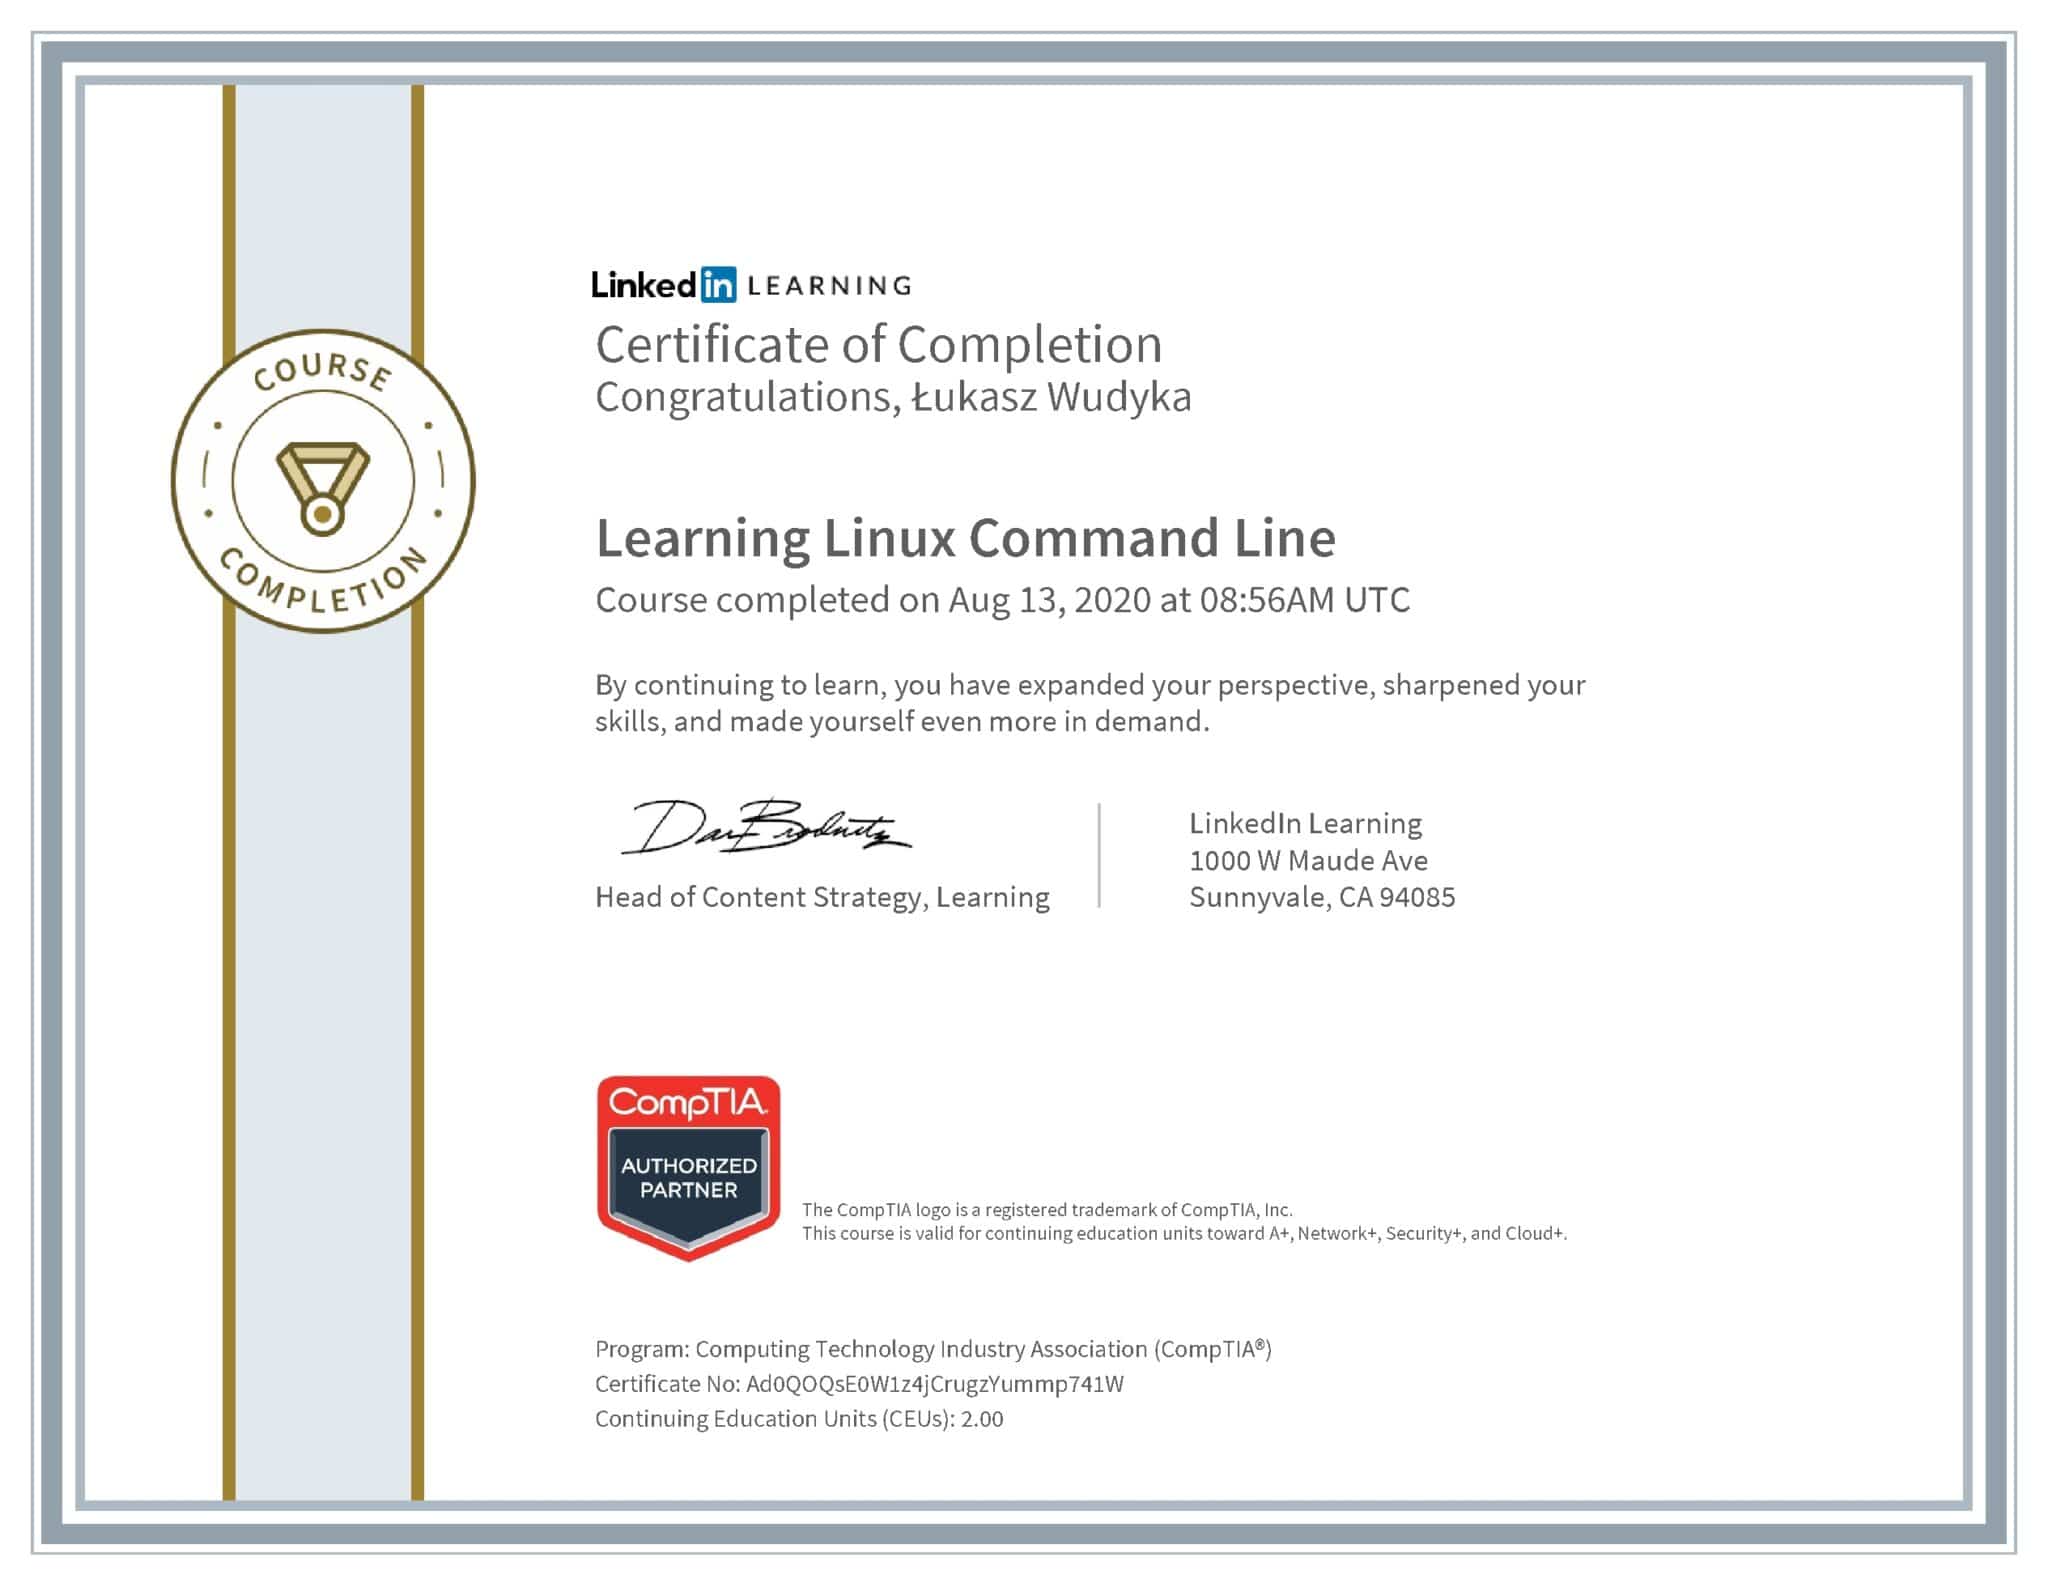 Łukasz Wudyka certyfikat LinkedIn Learning Linux Command Line CompTIA